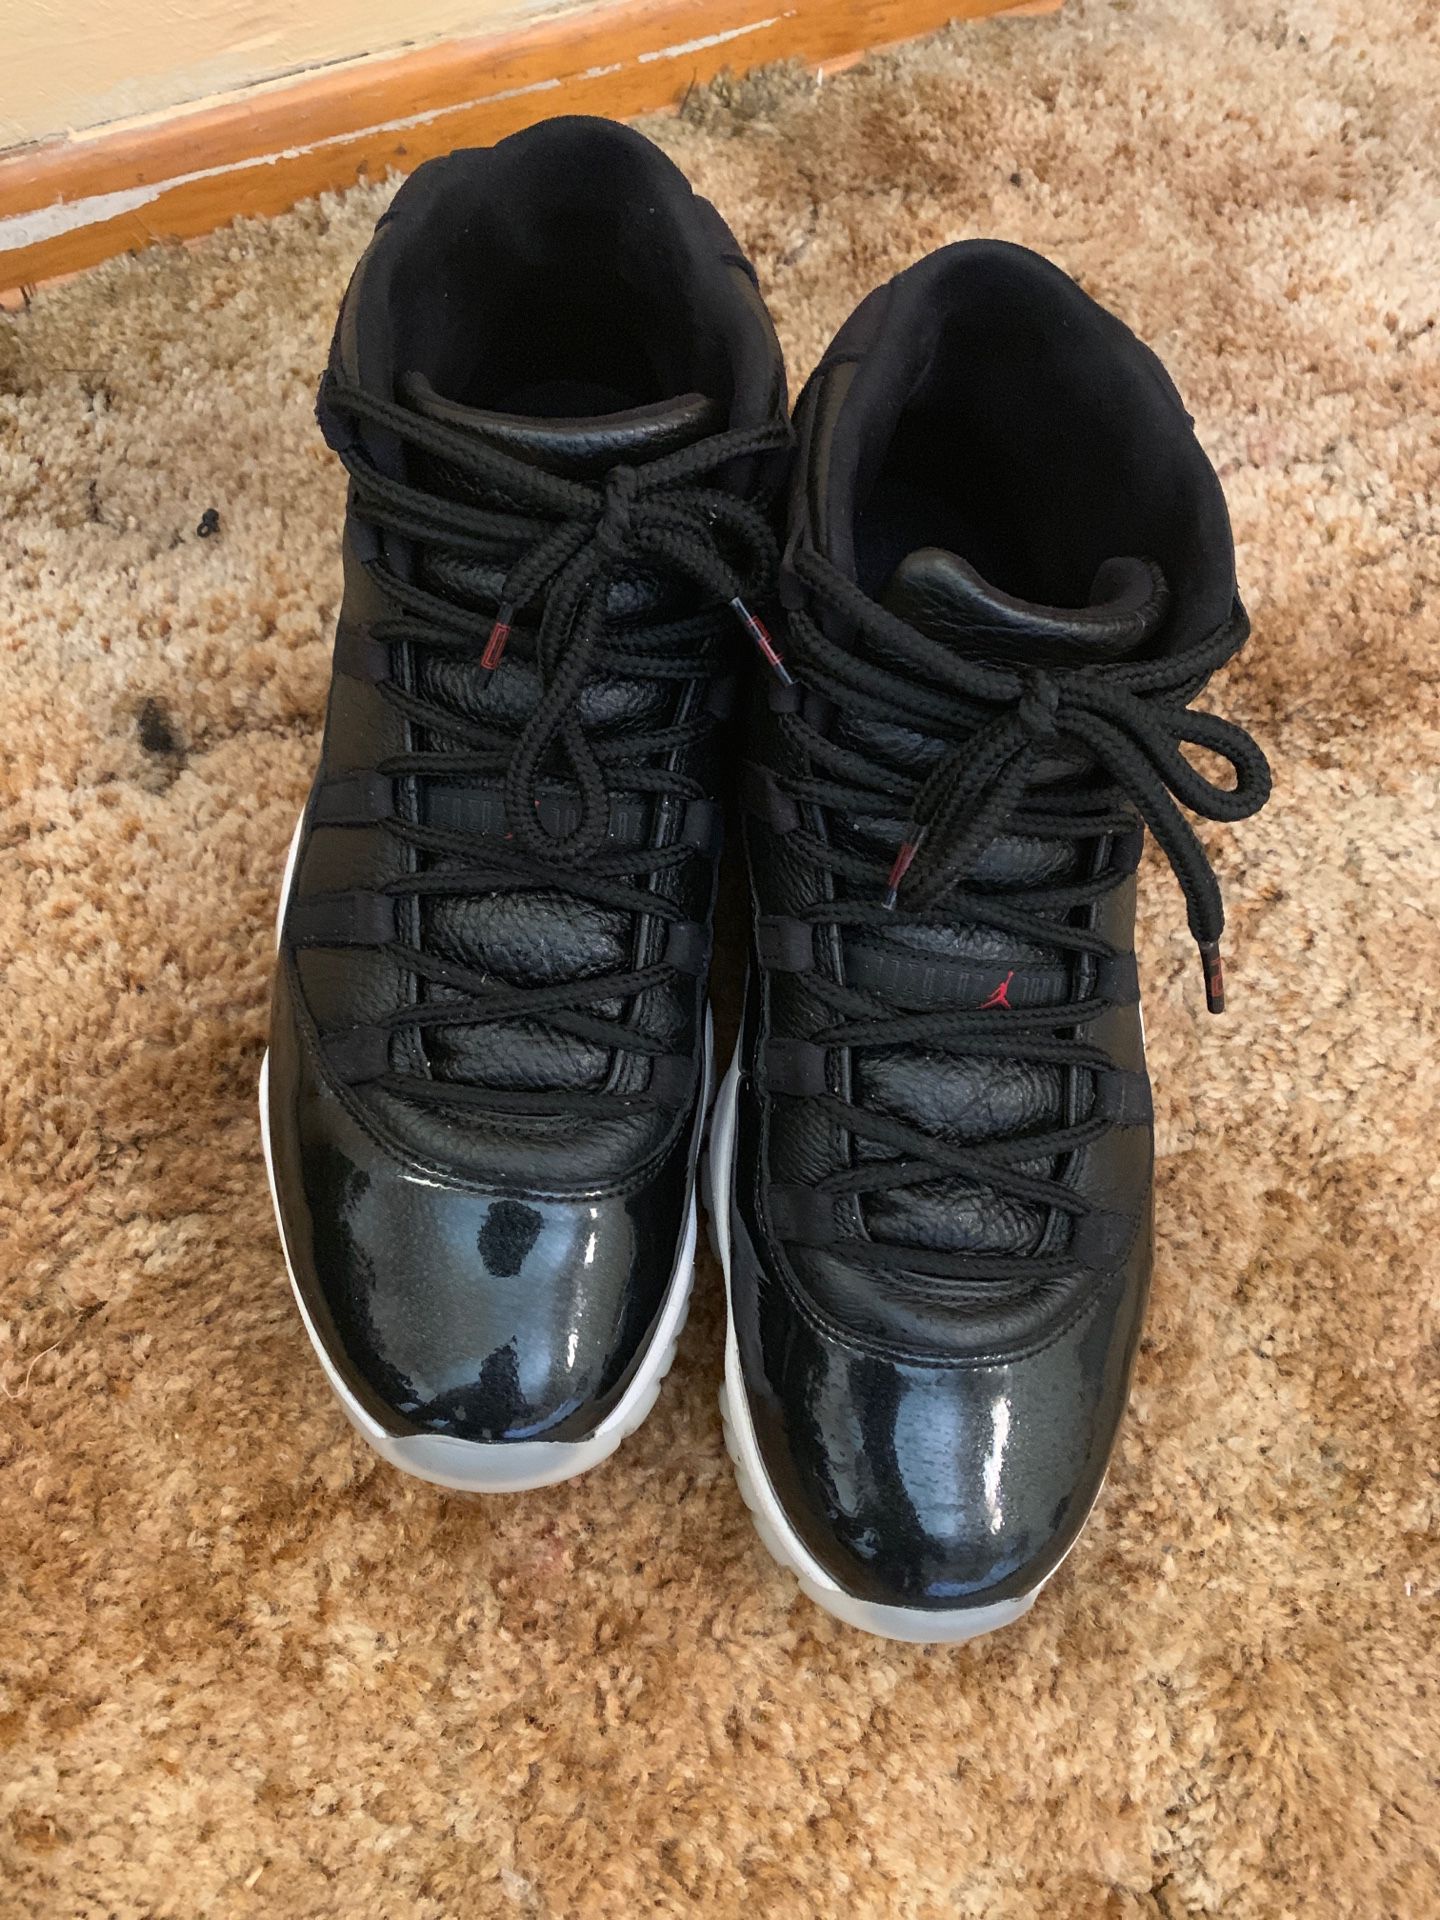 Air Jordan 11 size 11.5